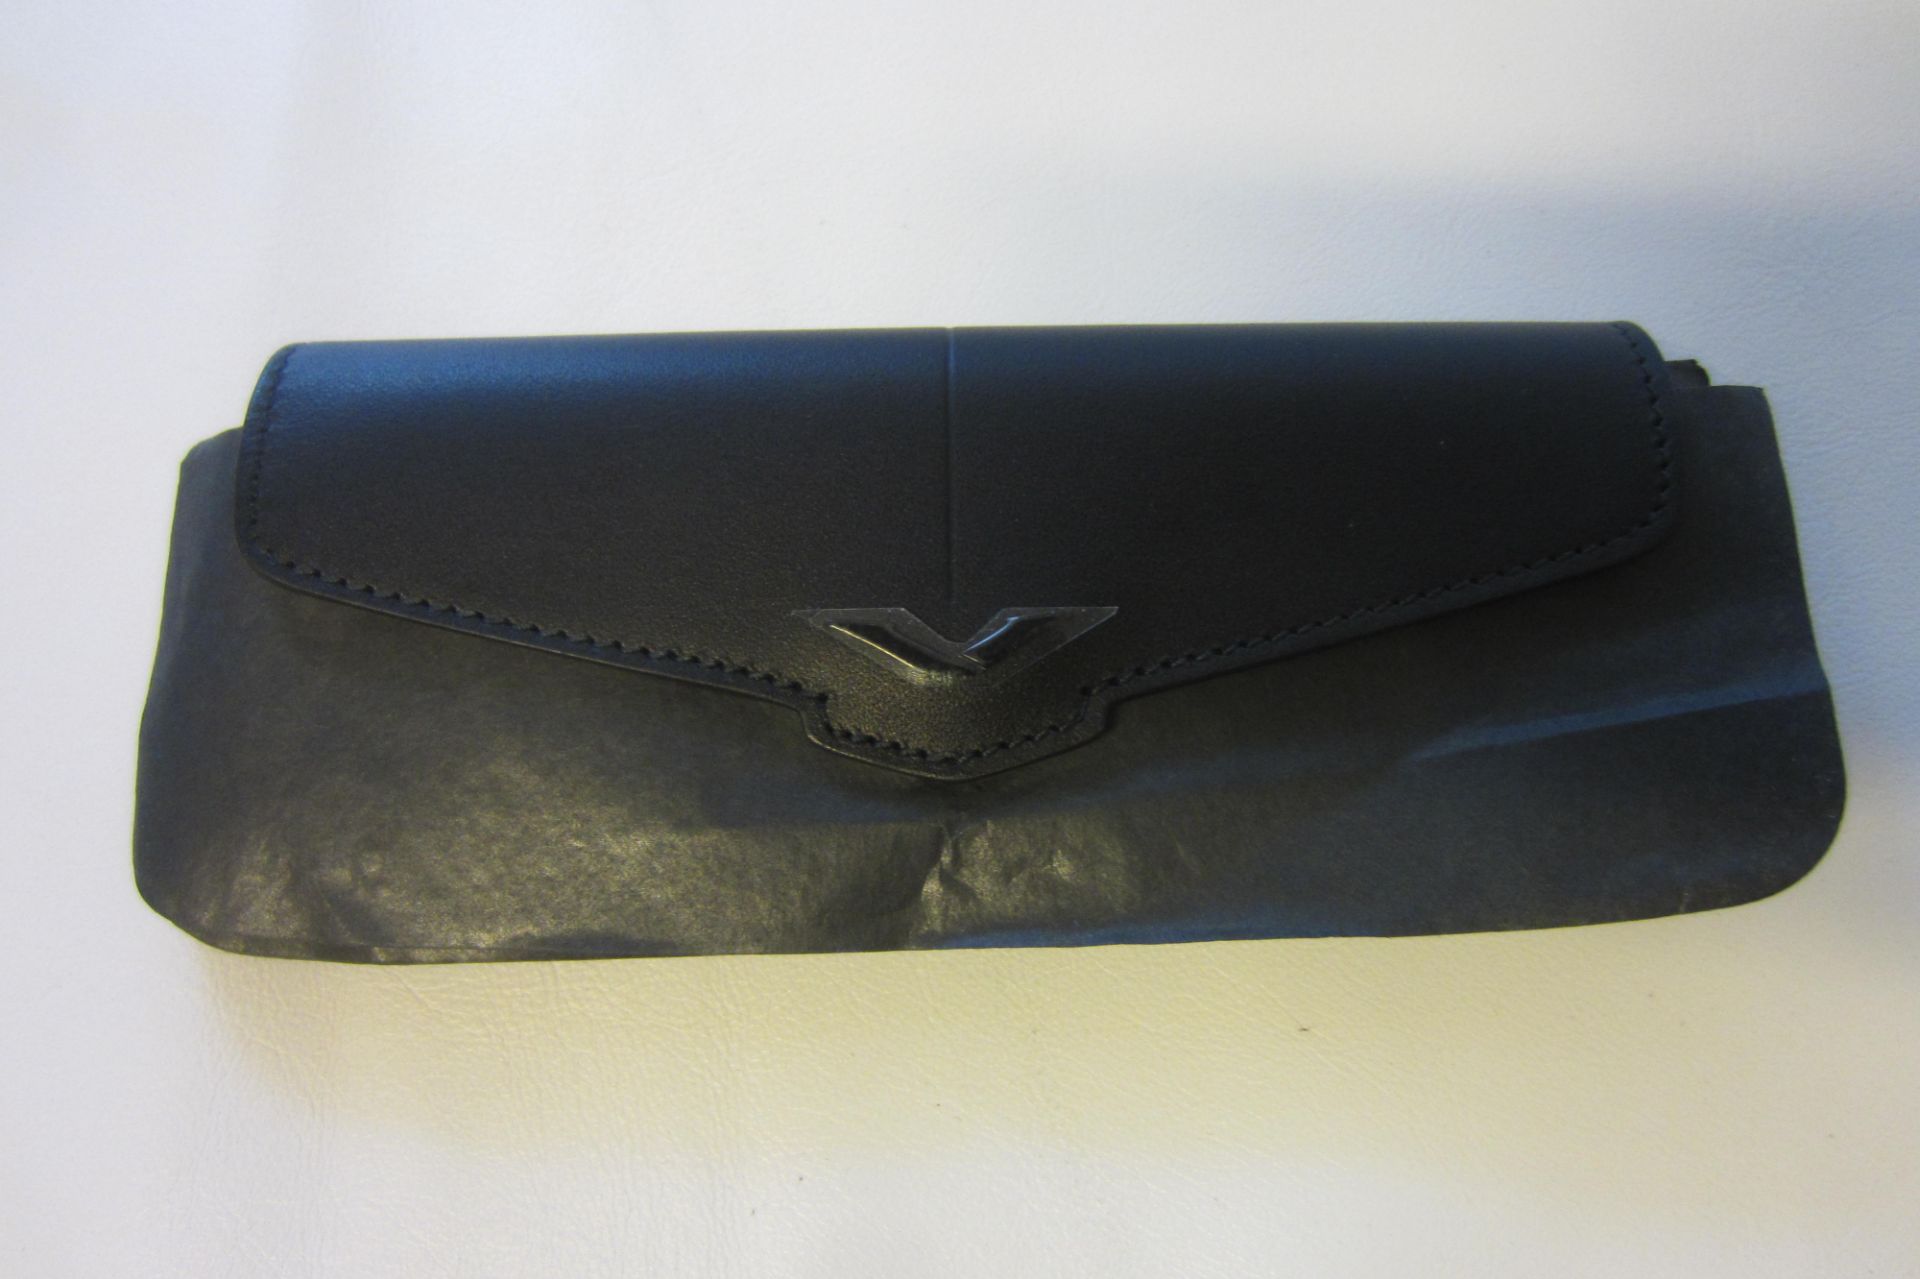 Signature S Black Leather Case with Black "V" Insignia